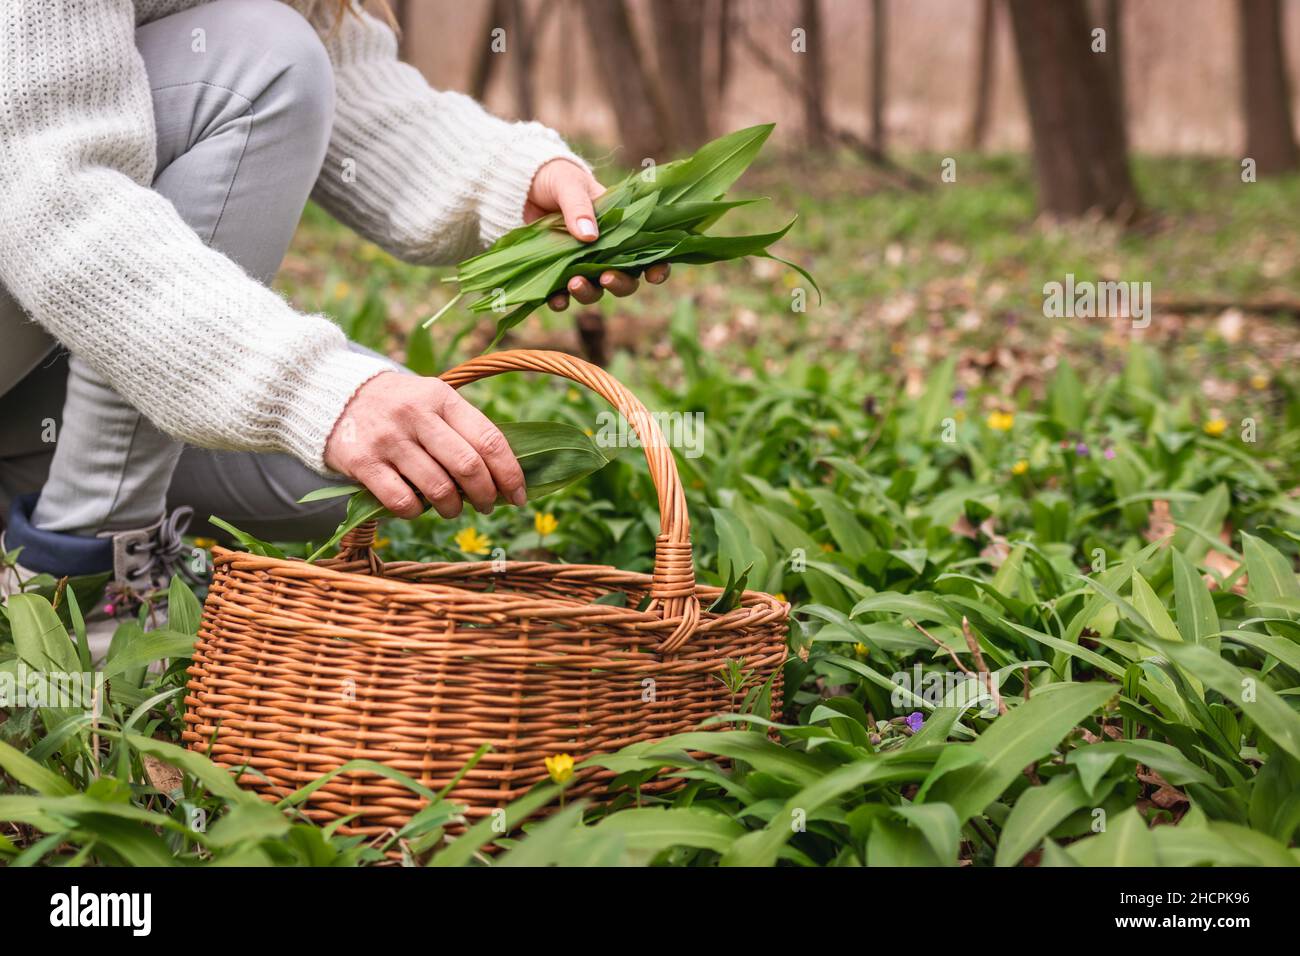 Woman picking Wild Garlic (allium ursinum) in forest. Harvesting Ramson leaves herb into wicker basket Stock Photo